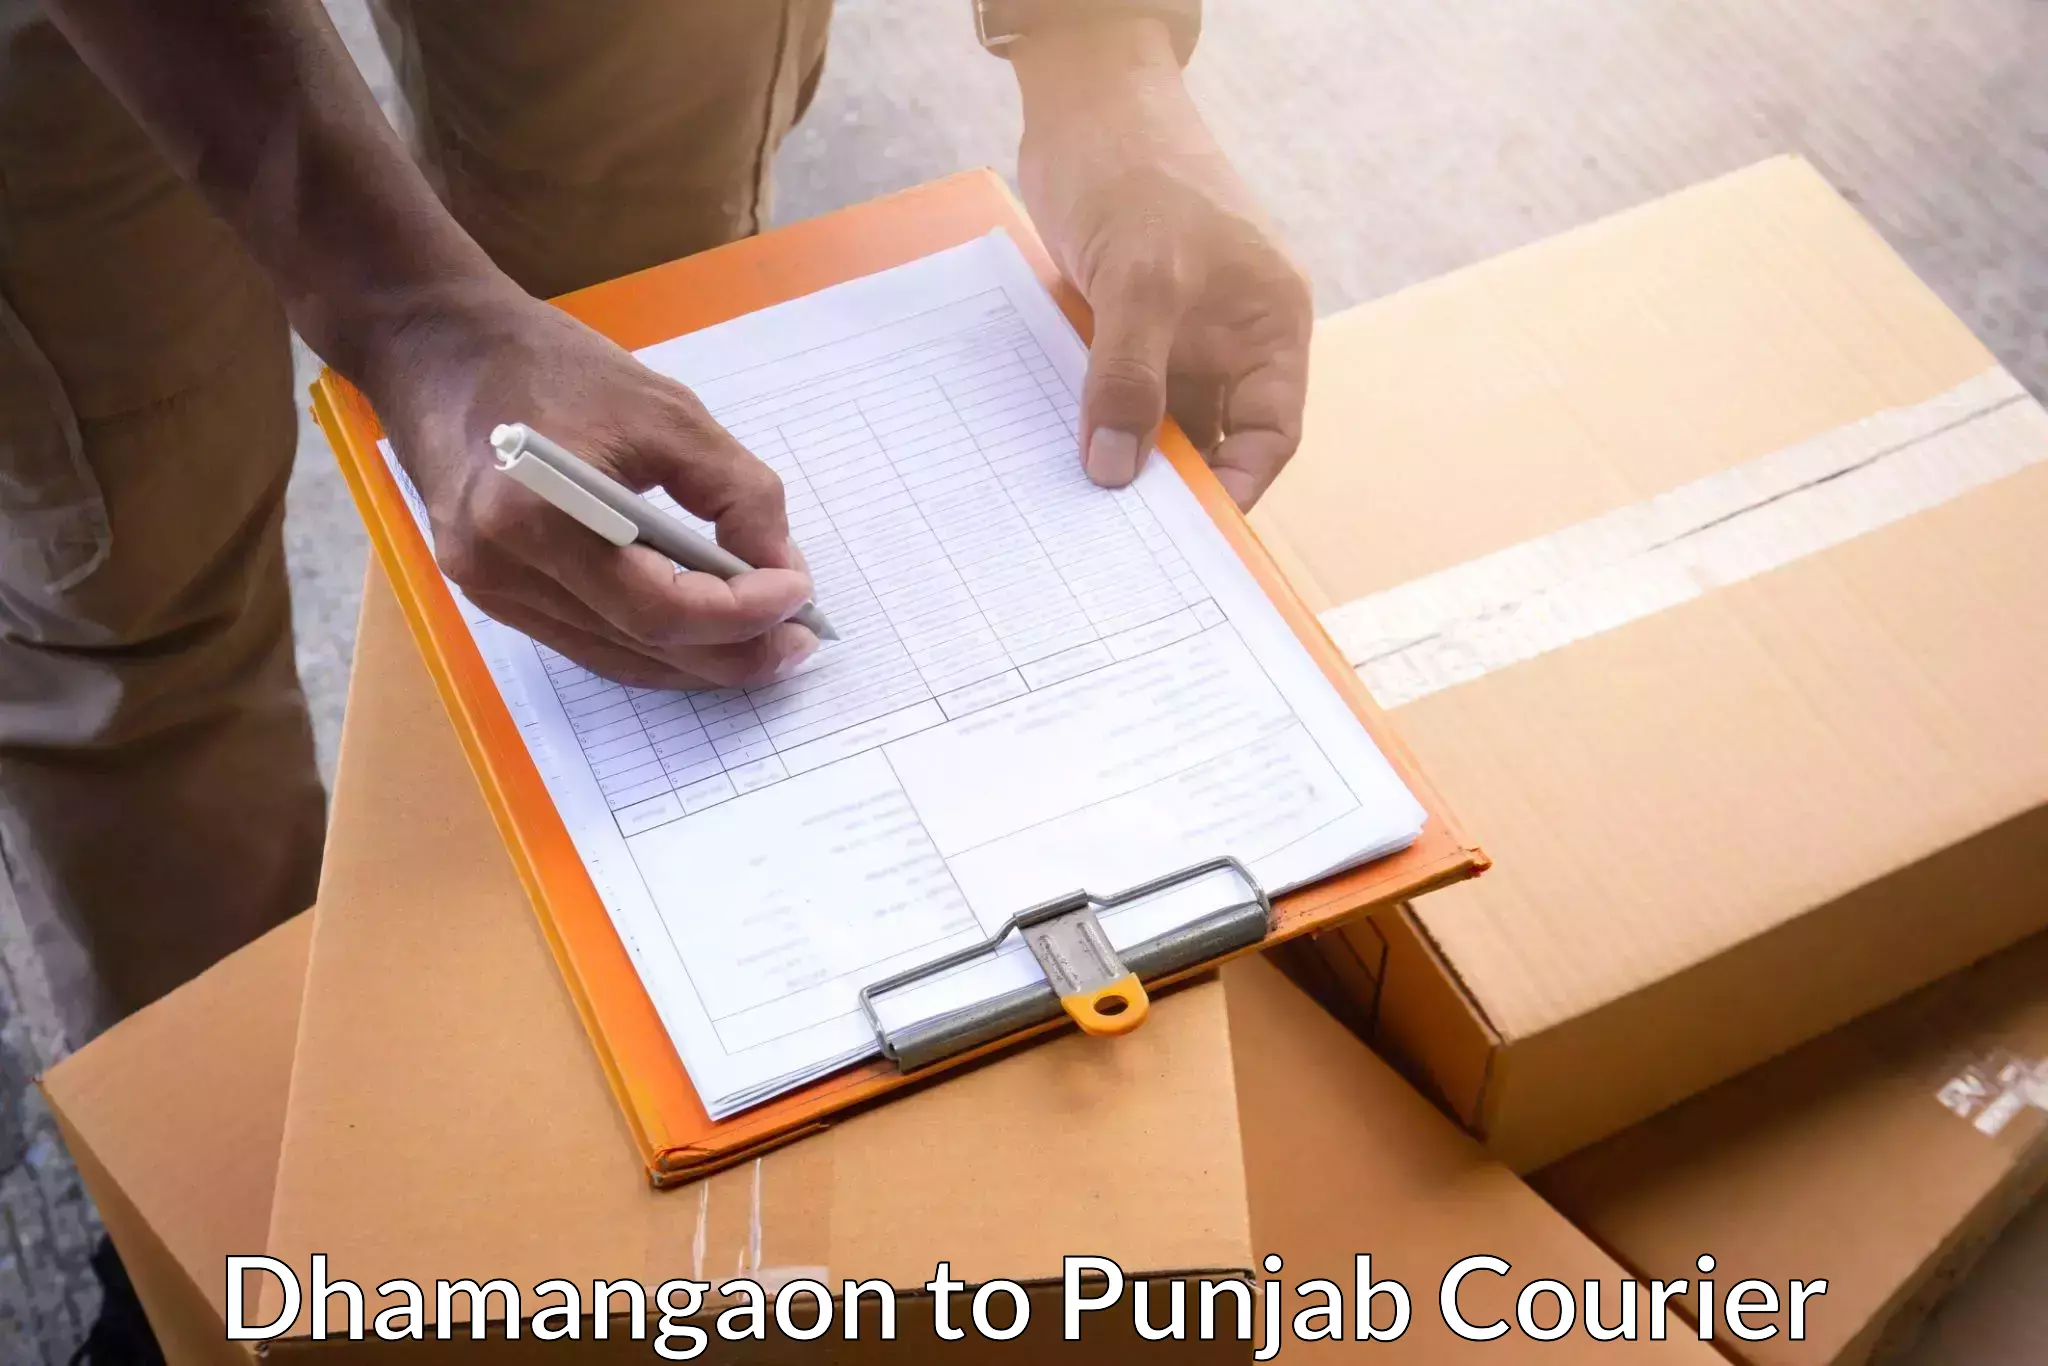 User-friendly courier app Dhamangaon to Faridkot